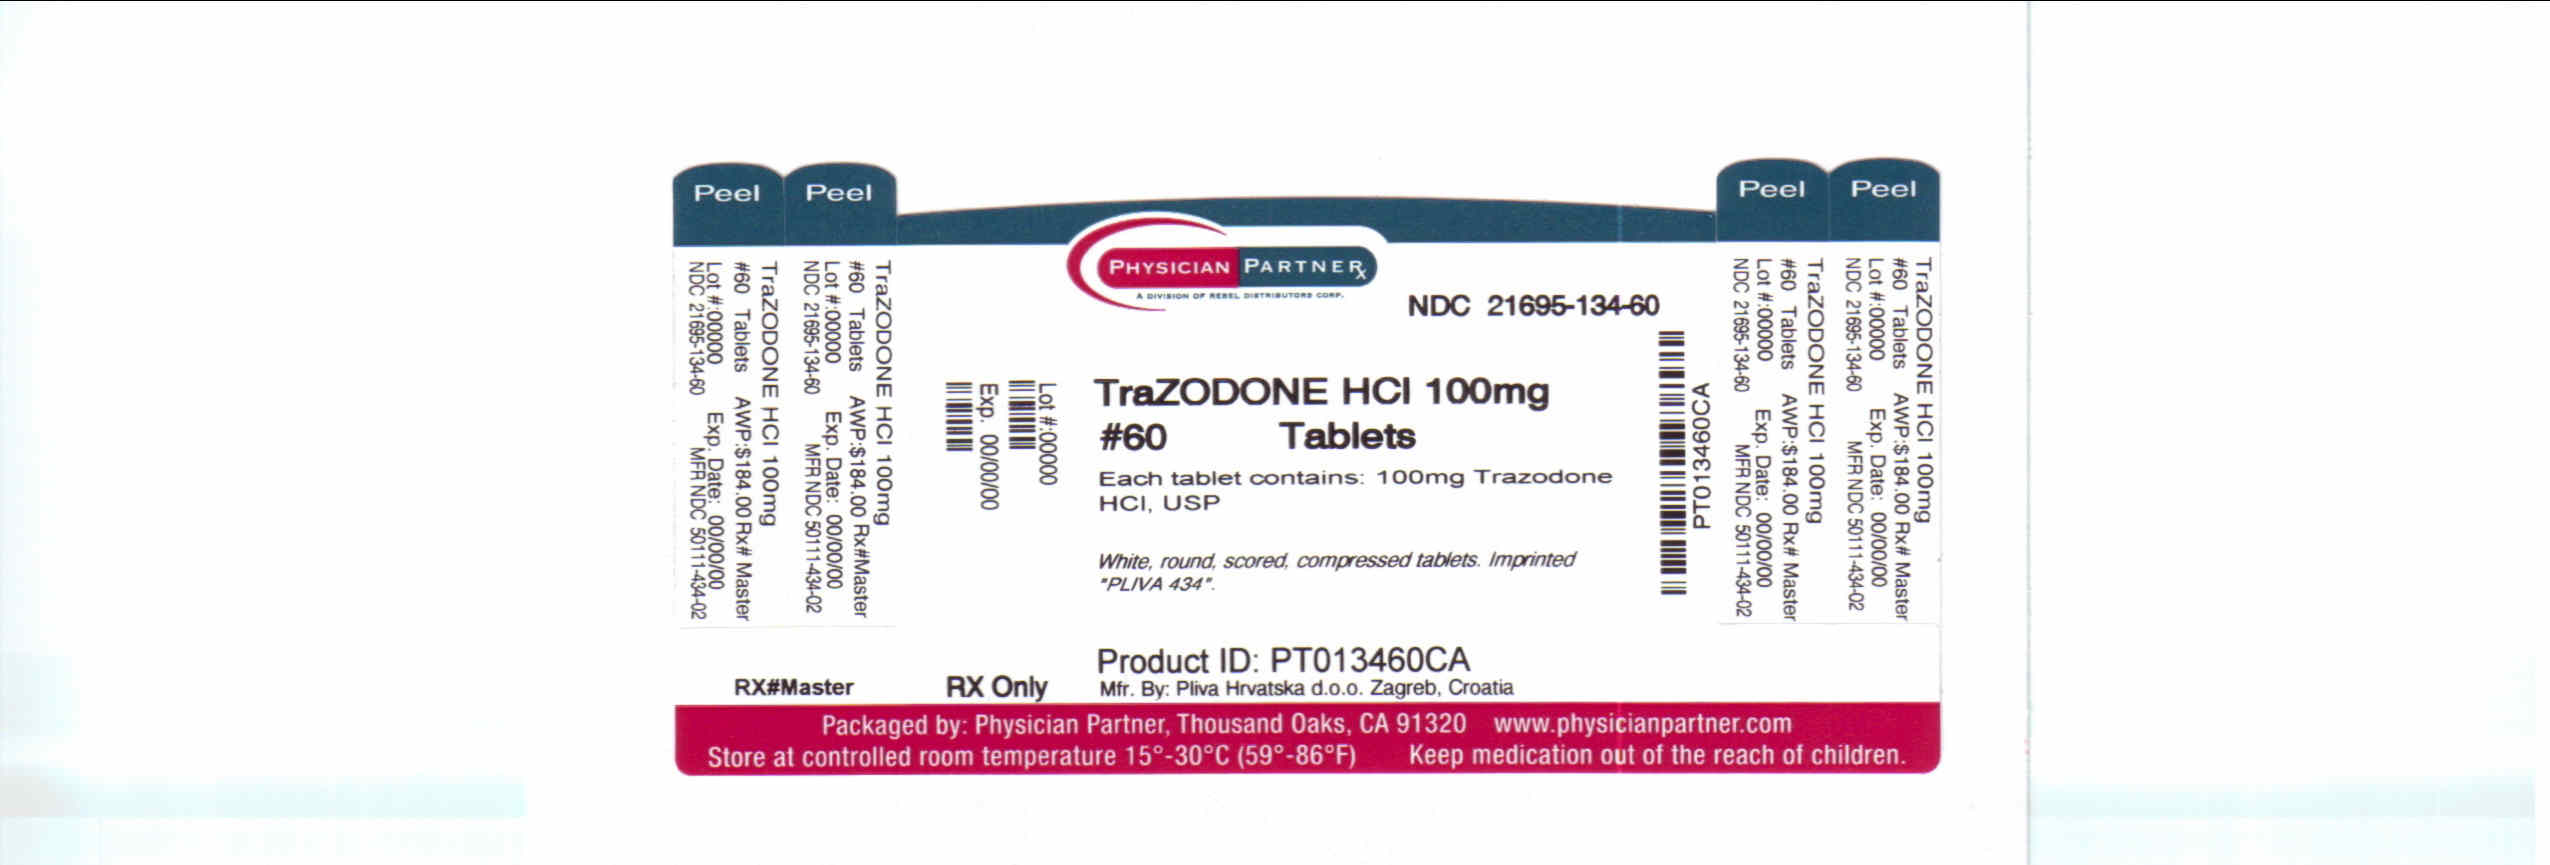 Trazodone HCl 100mg